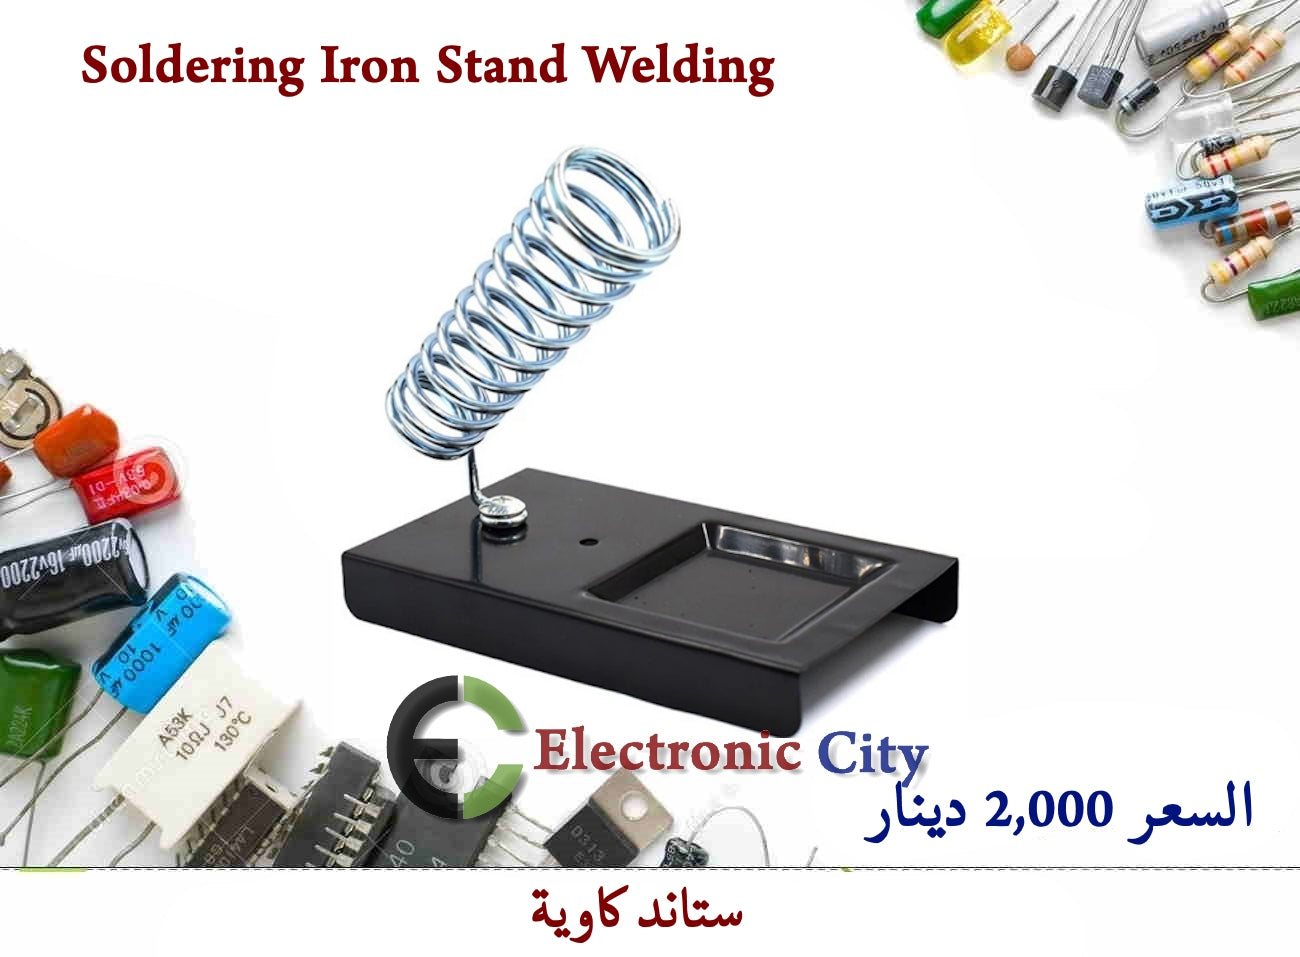 Soldering Iron Stand Welding